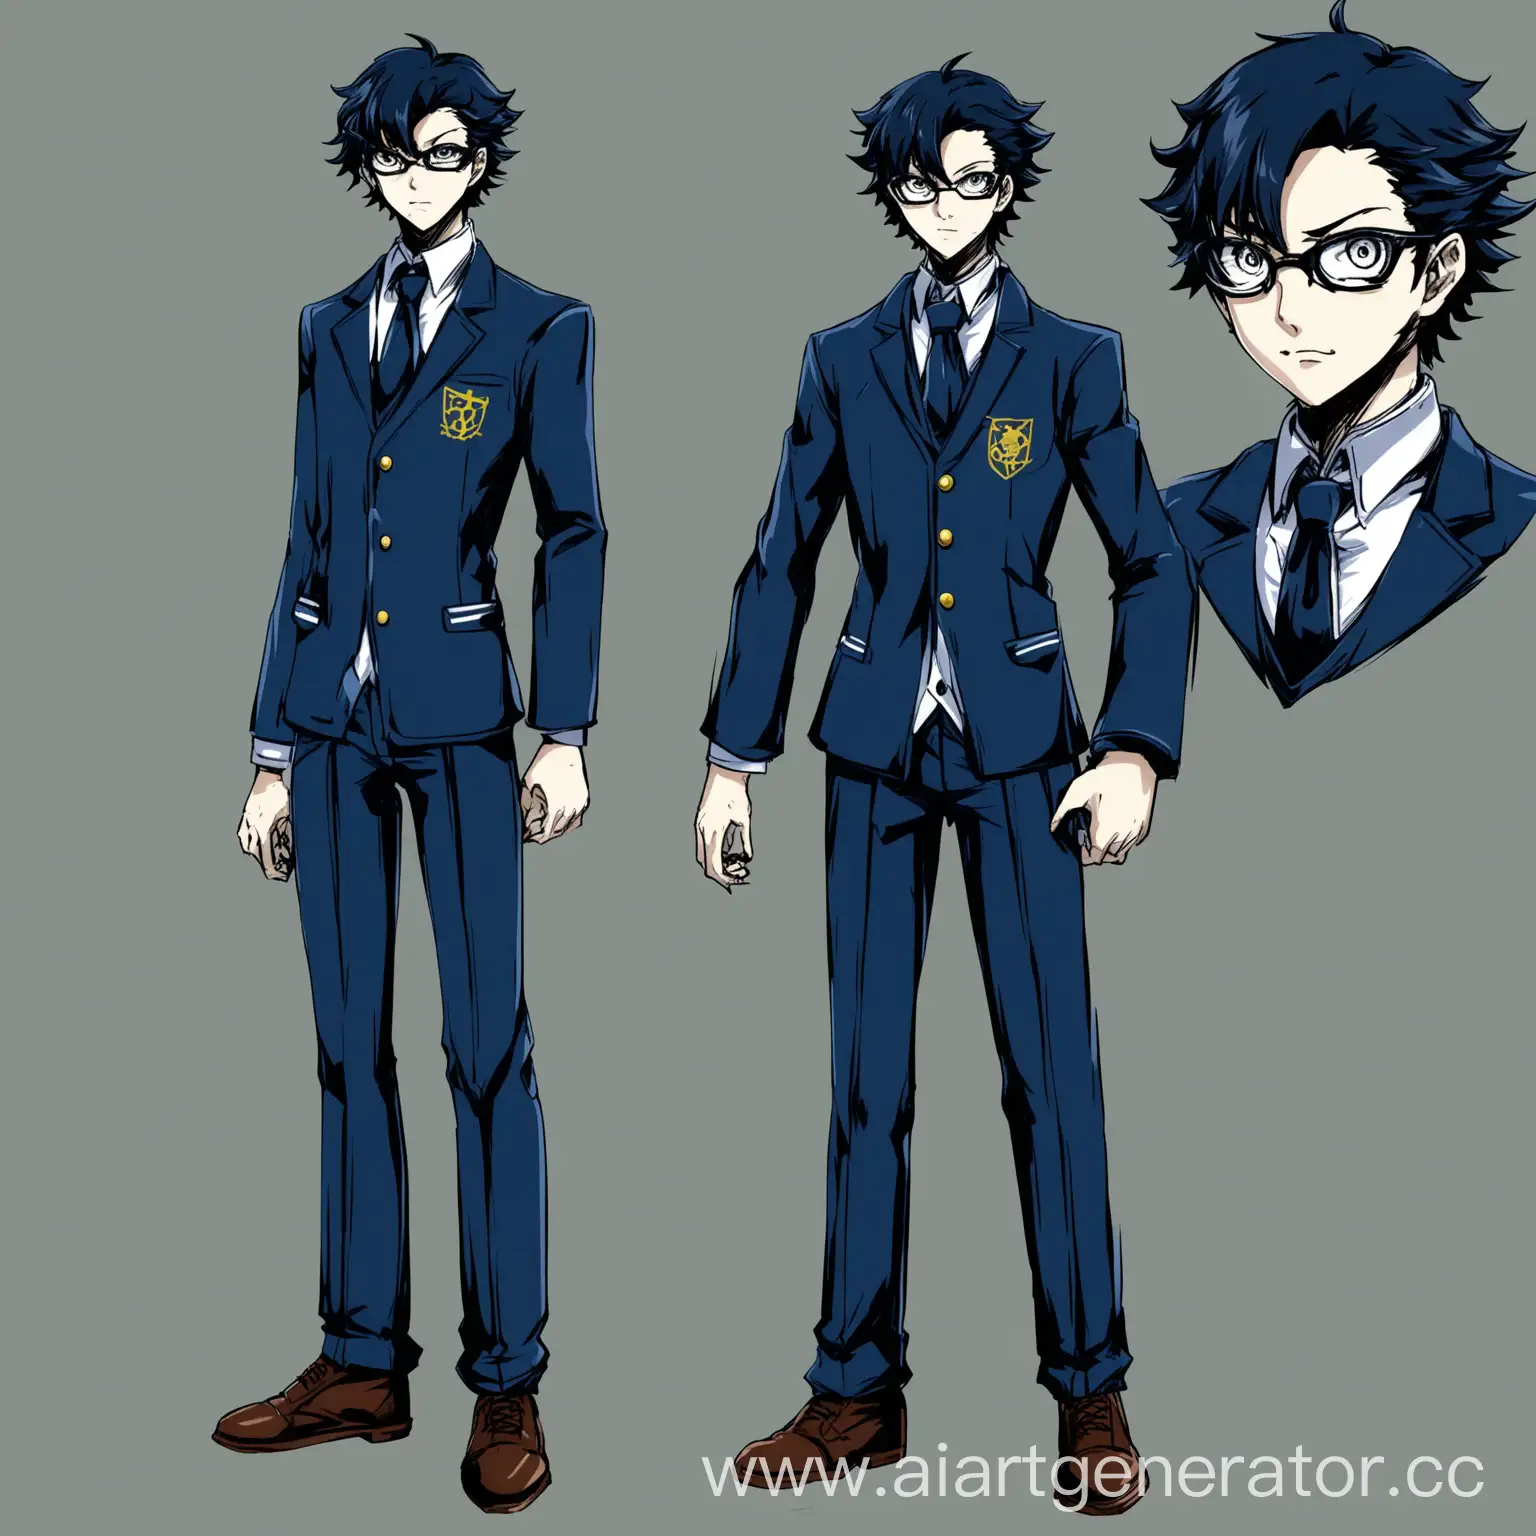 High-School-Boy-Phantom-Thief-at-Shujin-Academy-Tokyo-Original-Character-Art-in-Persona-Style